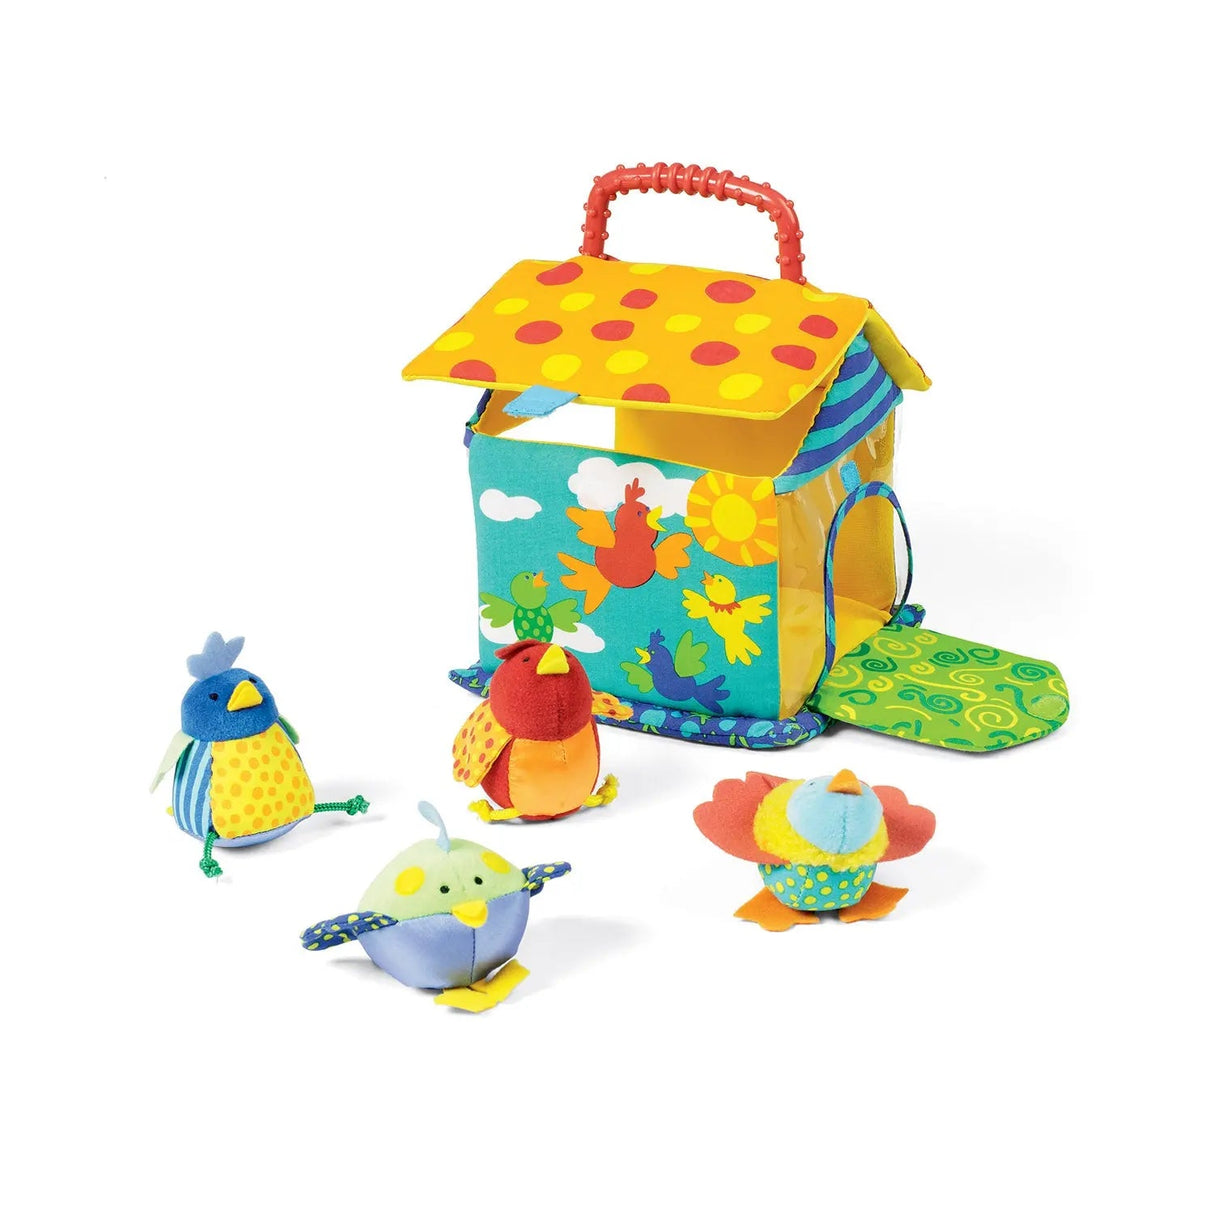 Put & Peek Birdhouse by Manhattan Toy